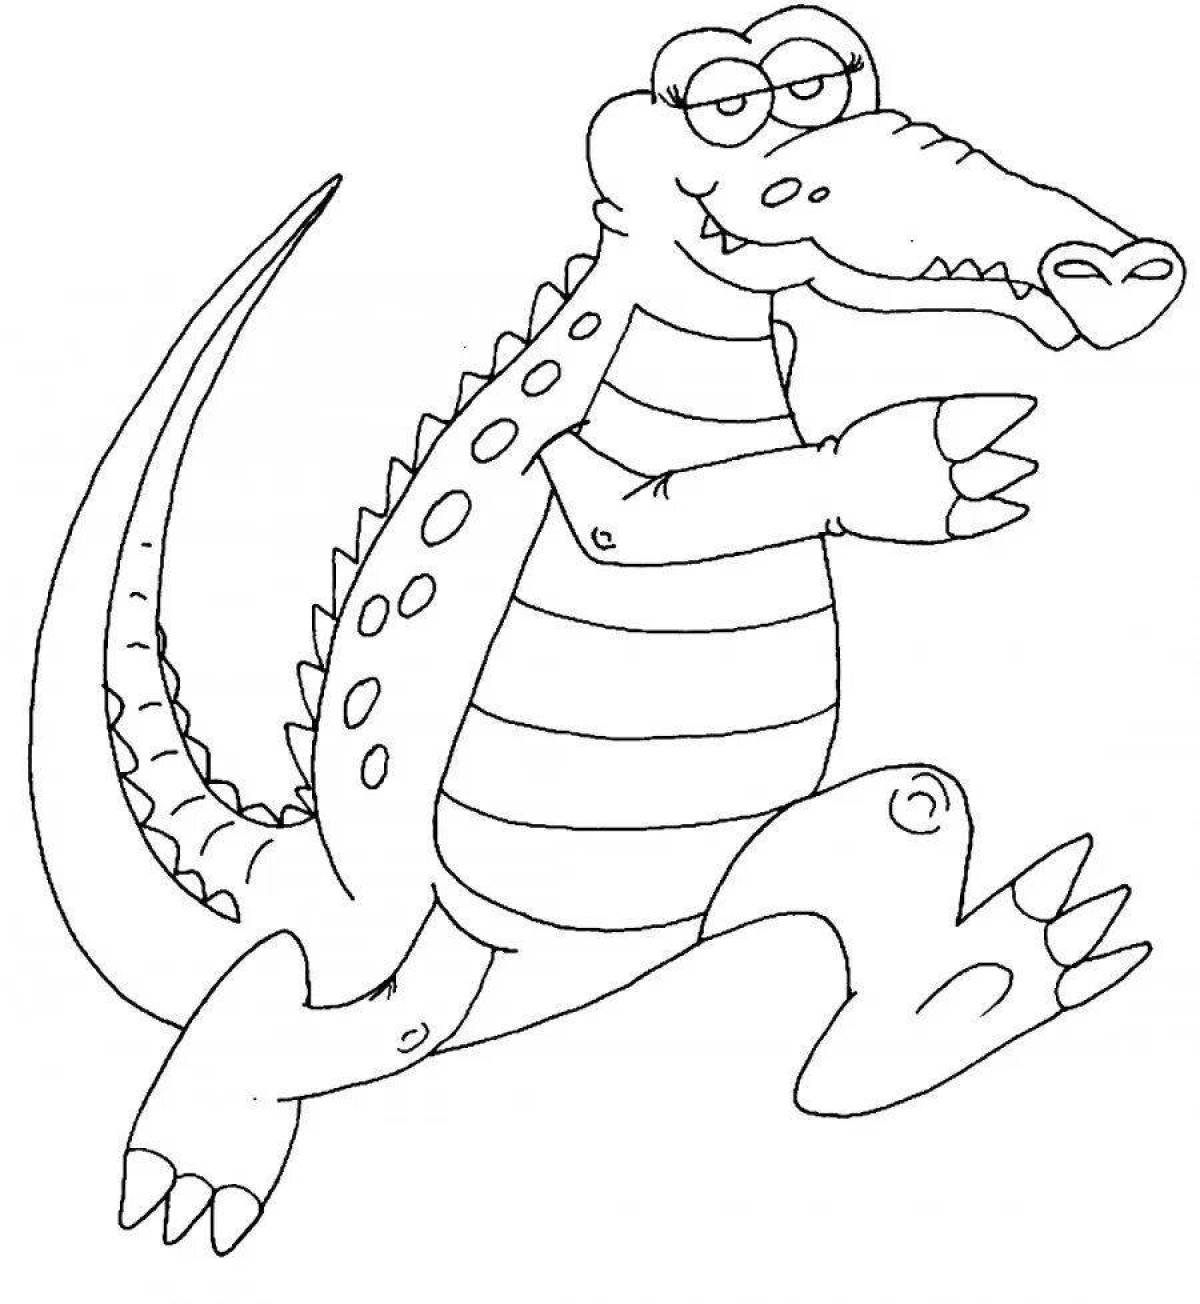 Joyful crocodile coloring for kids